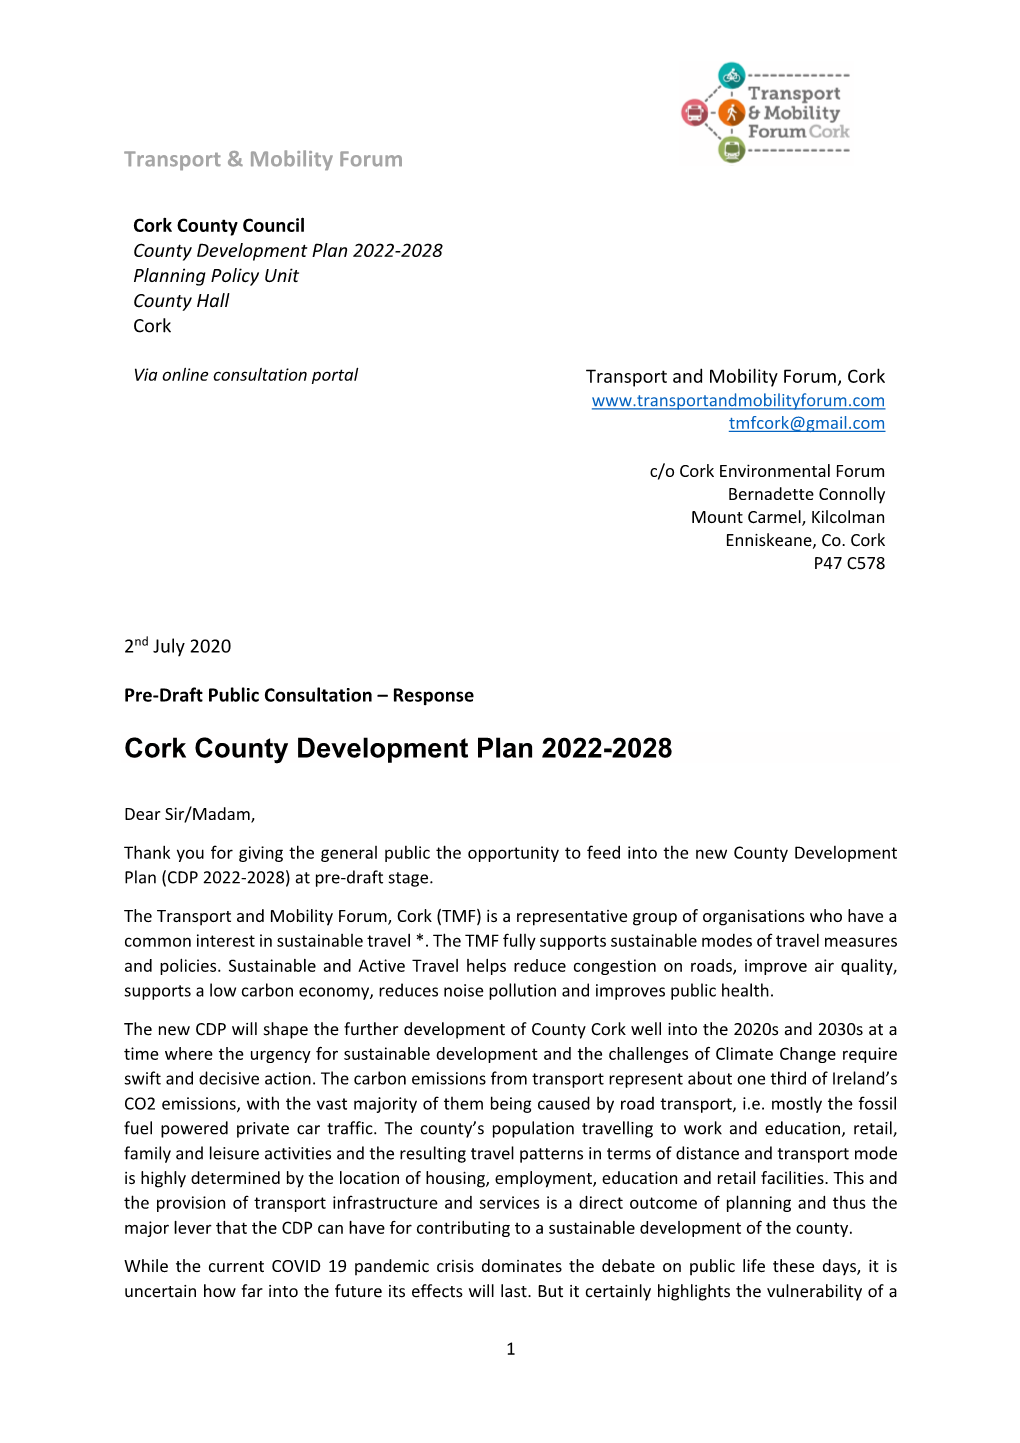 Cork County Development Plan 2022-2028